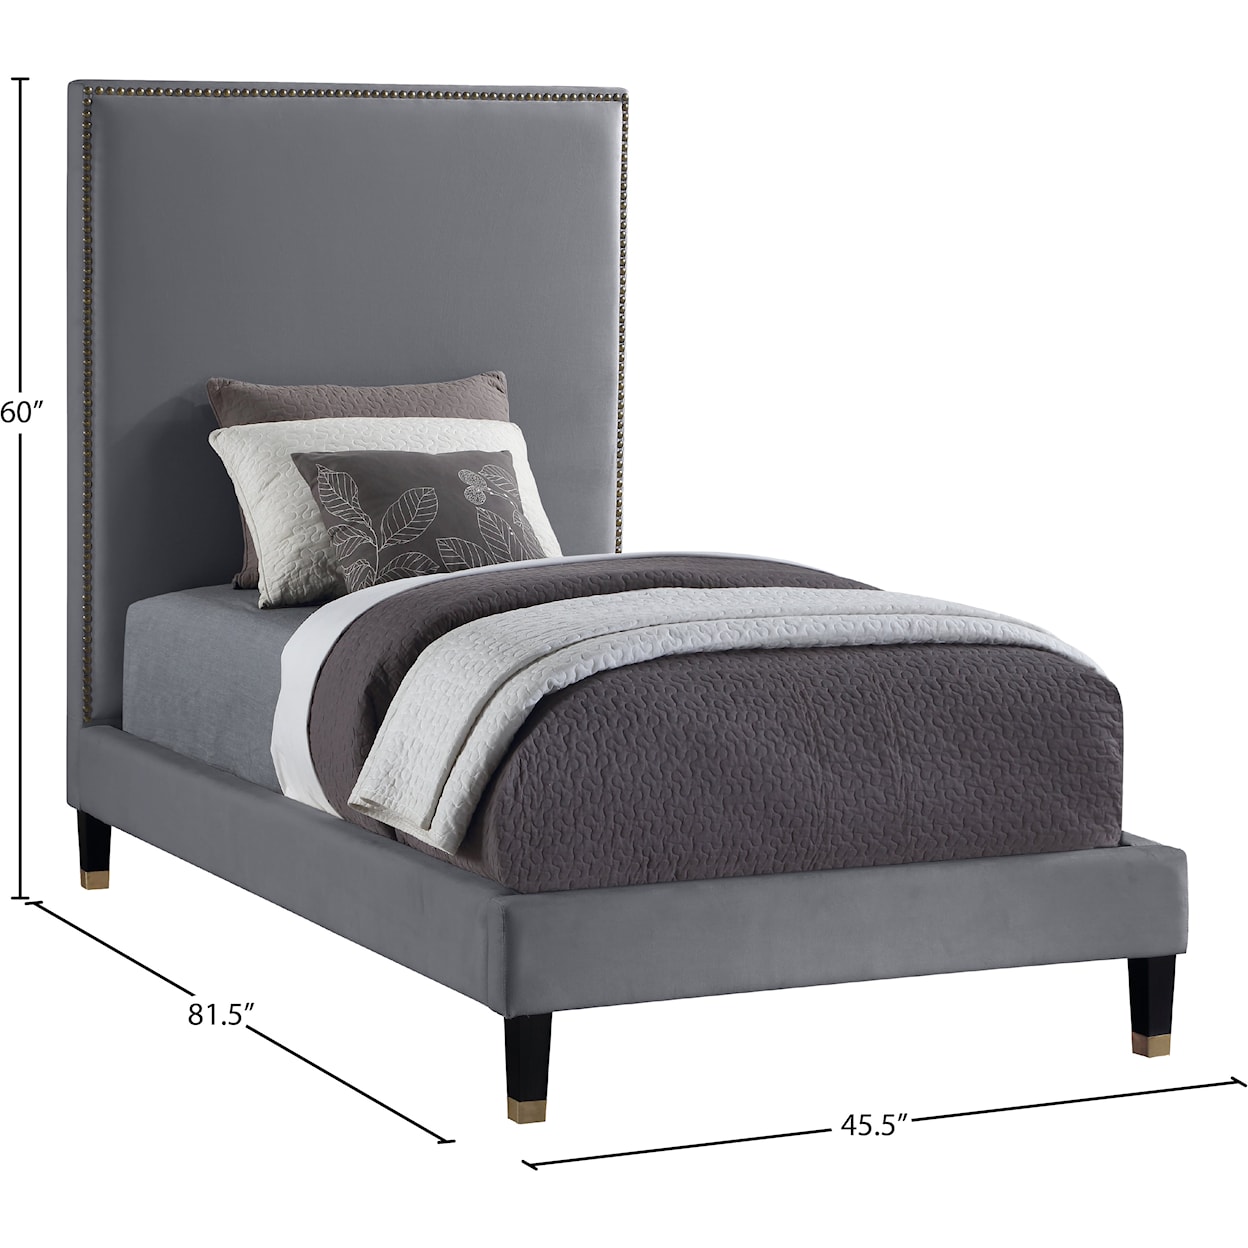 Meridian Furniture Harlie Twin Bed